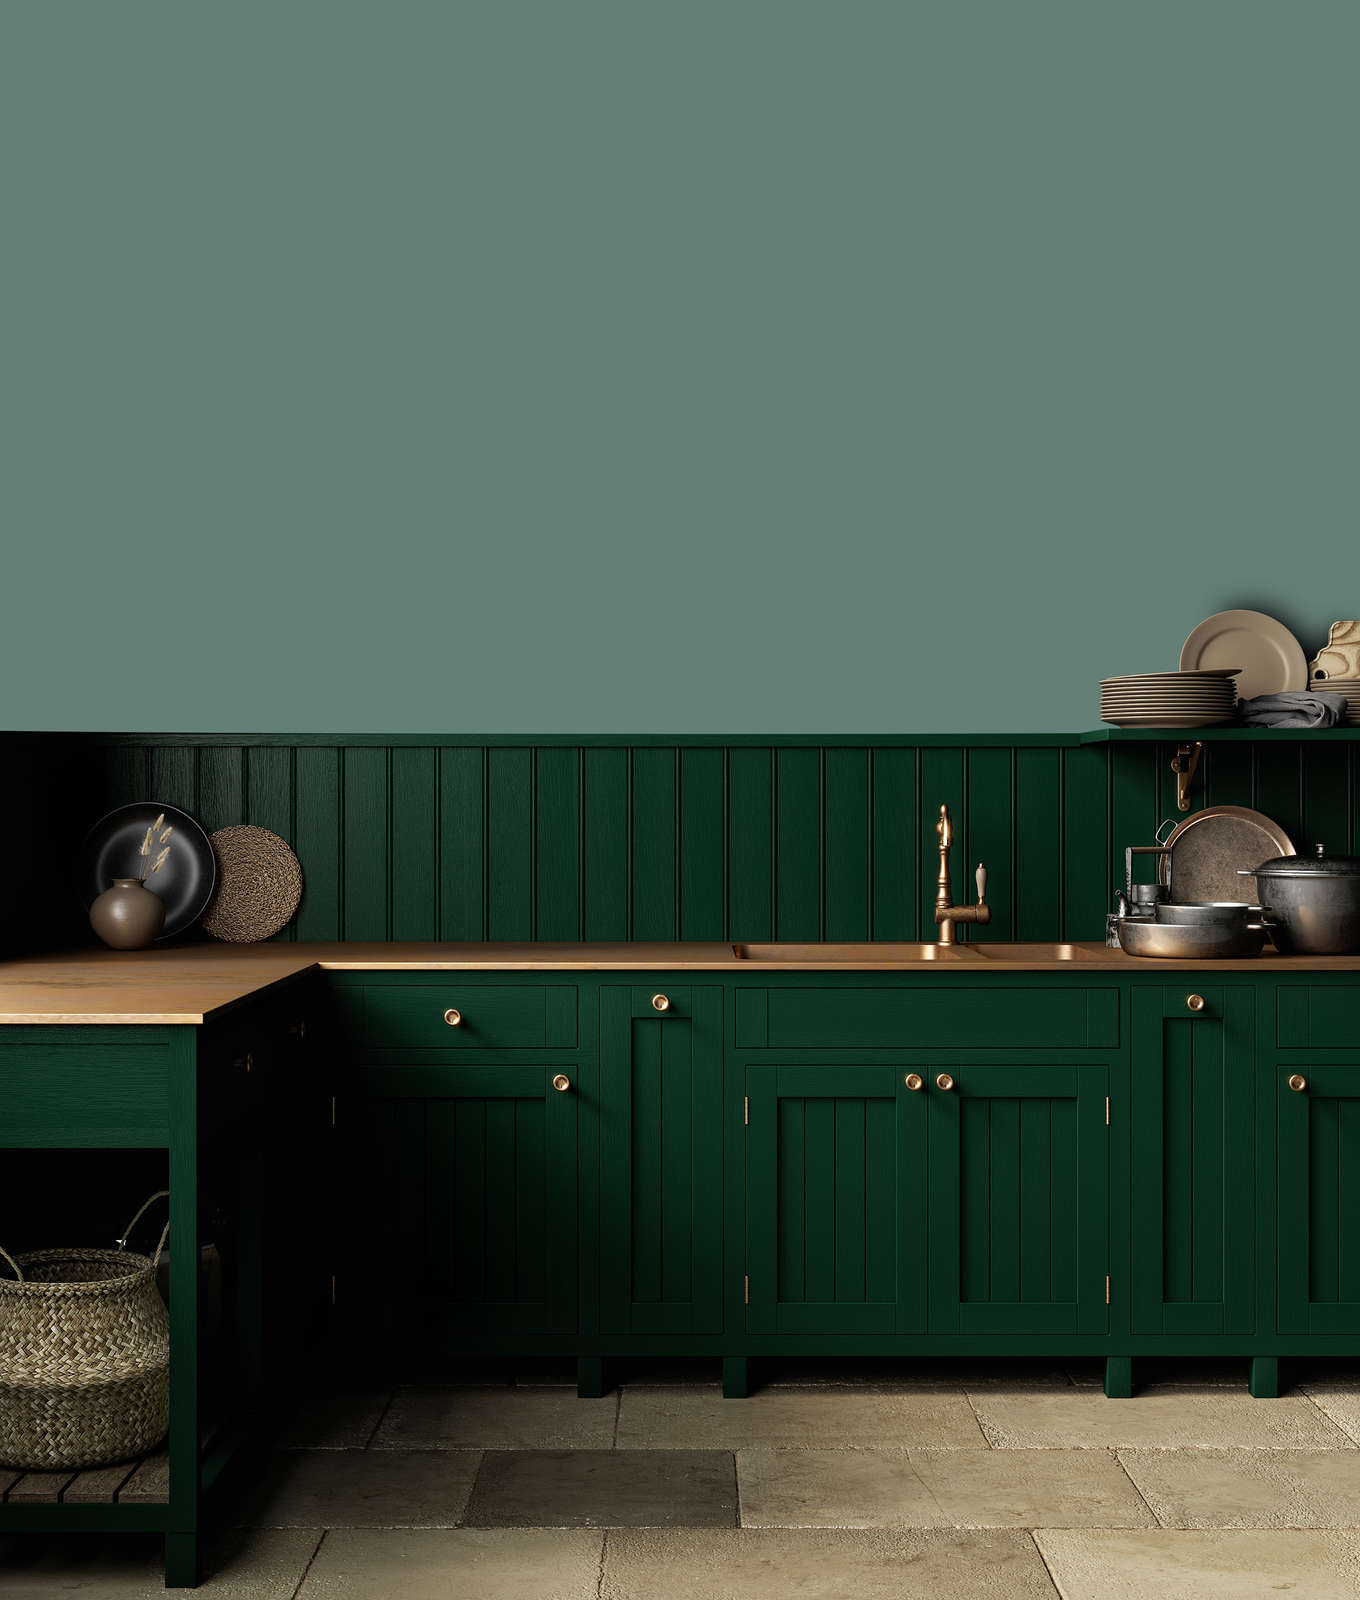             Premium Wandfarbe ruhiges Eukalyptus »Expressive Emerald« NW410 – 1 Liter
        